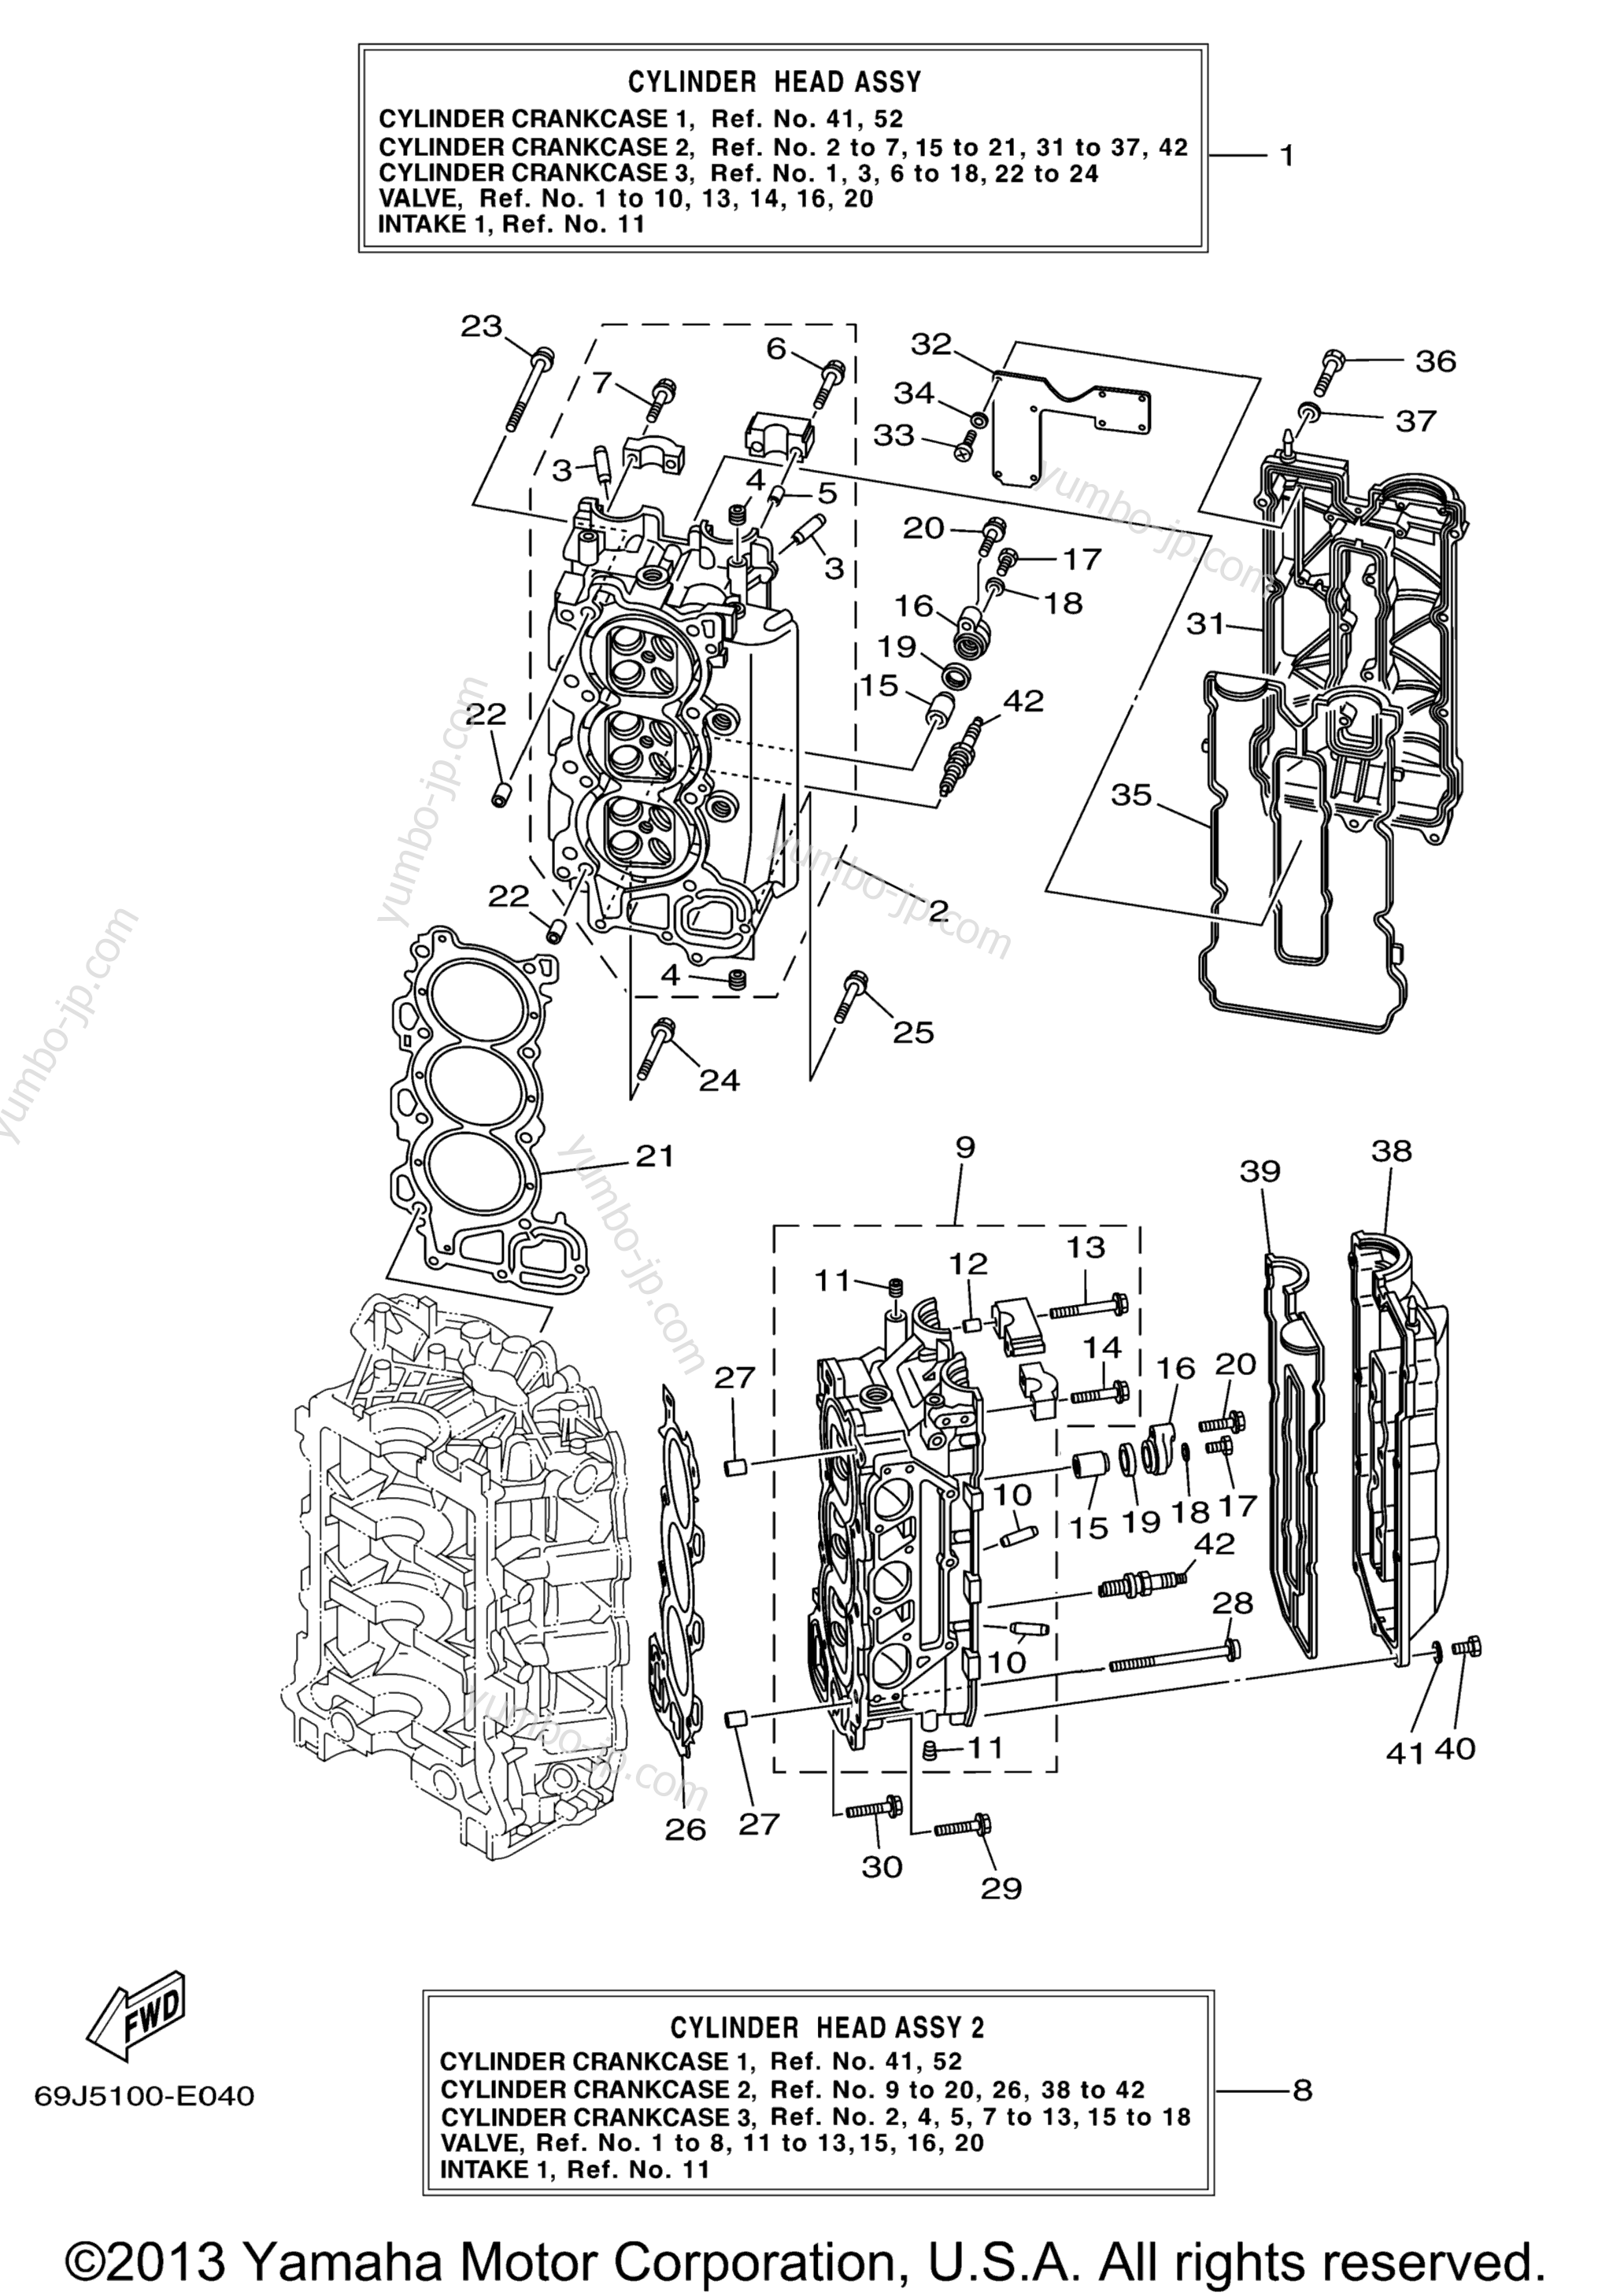 Cylinder Crankcase 2 для лодочных моторов YAMAHA LF225TXR (0405) 69J-1021983~1027874 LF225TXR_TUR 69K-1006907~10008 2006 г.